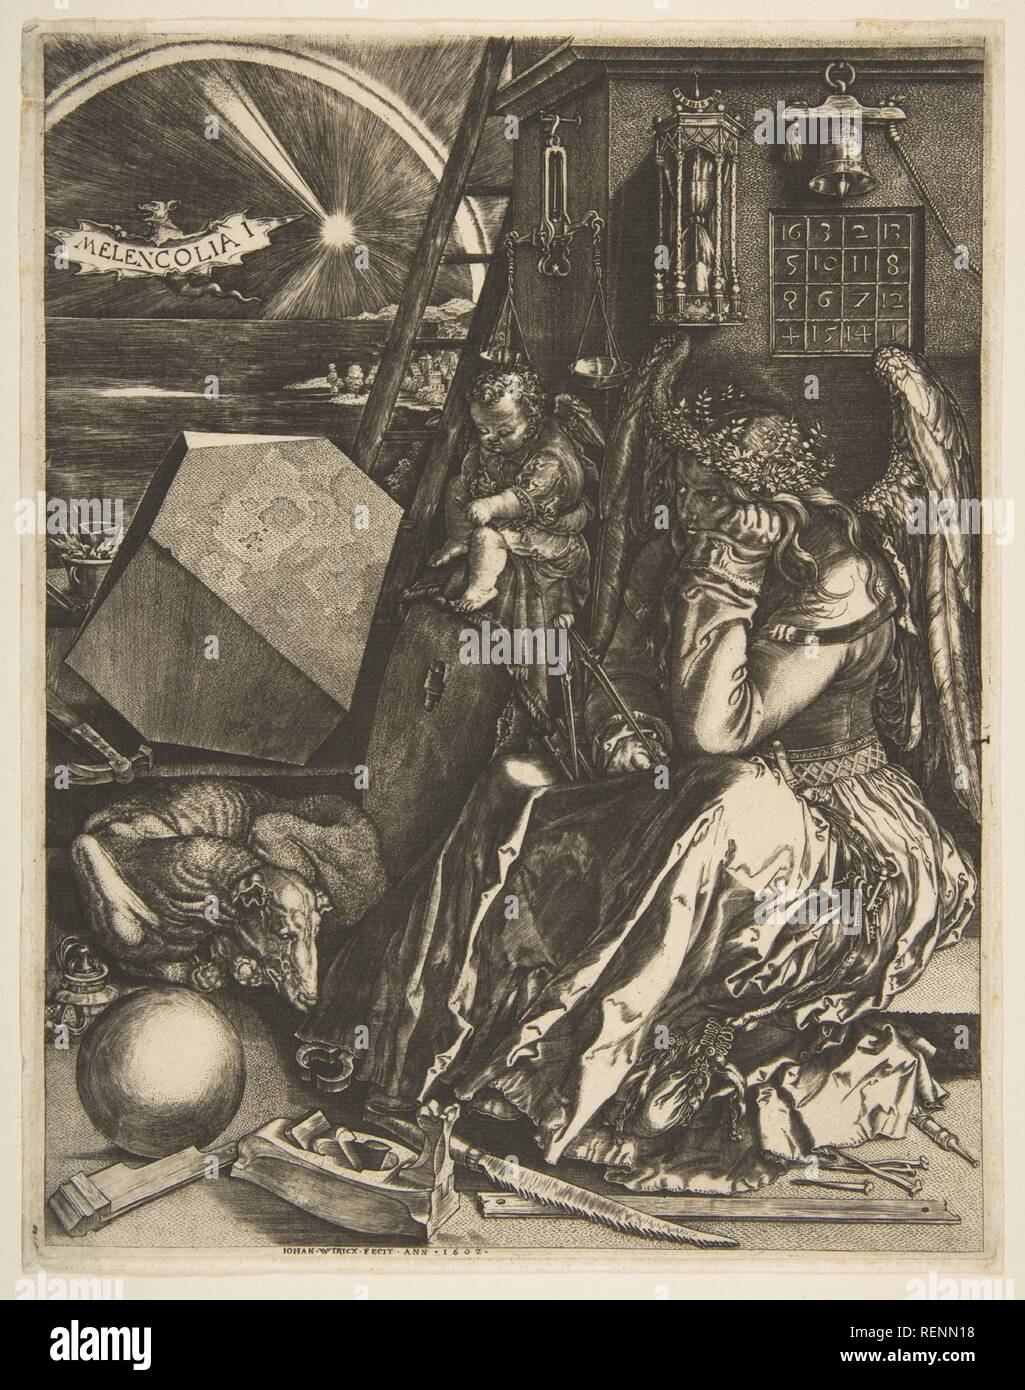 Melencolia I (copy). Artist: After Albrecht Dürer (German, Nuremberg 1471-1528 Nuremberg); Jan (Johannes) Wierix (Netherlandish, Antwerp 1549-1615 Brussels). Dimensions: Sheet: 9 1/2 × 7 9/16 in. (24.2 × 19.2 cm). Date: 1602. Museum: Metropolitan Museum of Art, New York, USA. Stock Photo